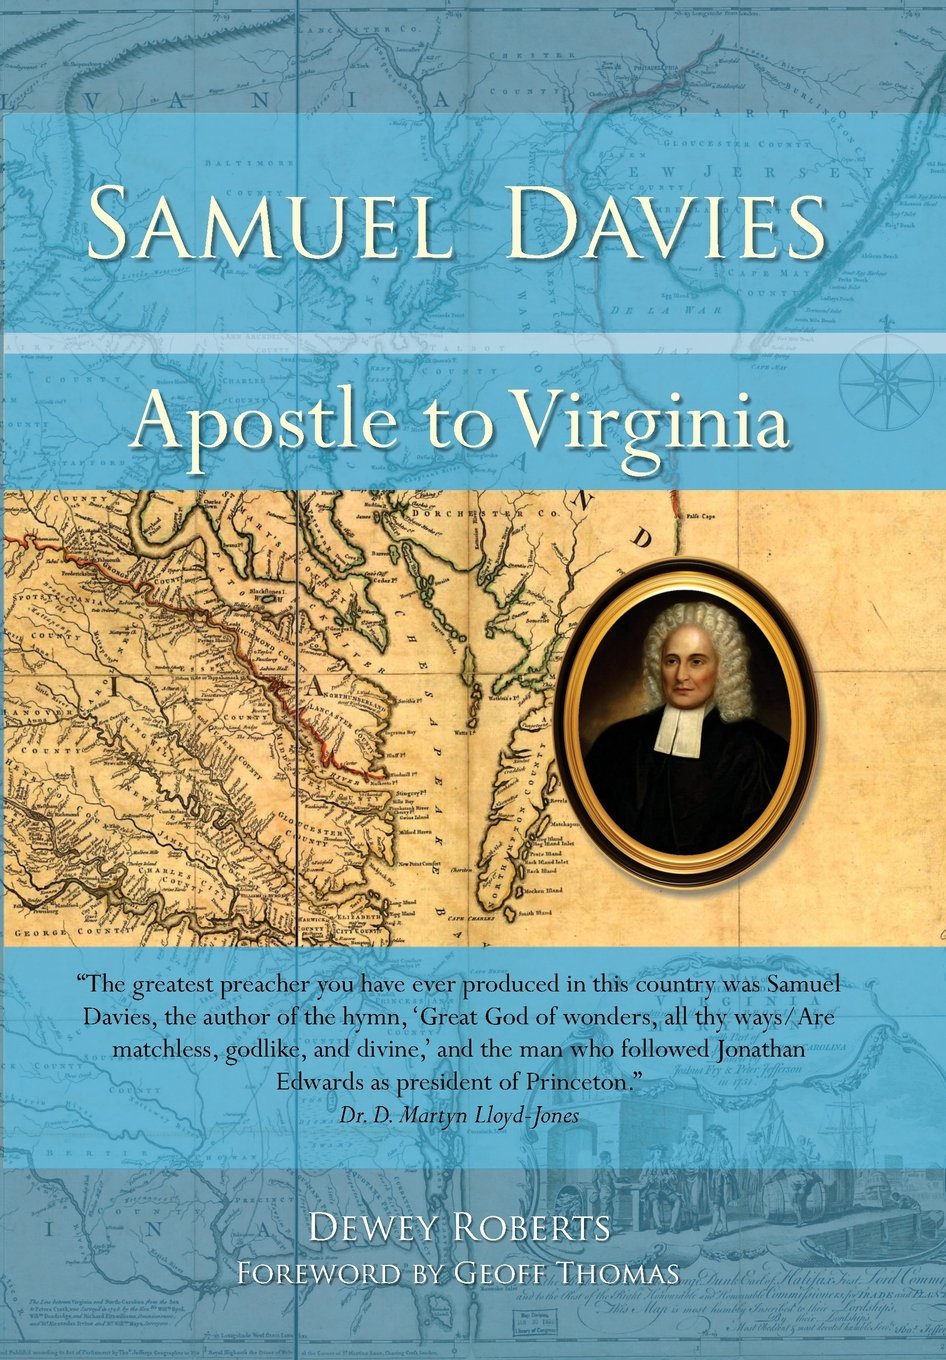 Book Notice: SAMUEL DAVIES: APOSTLE TO VIRGINIA, by Dewey Roberts